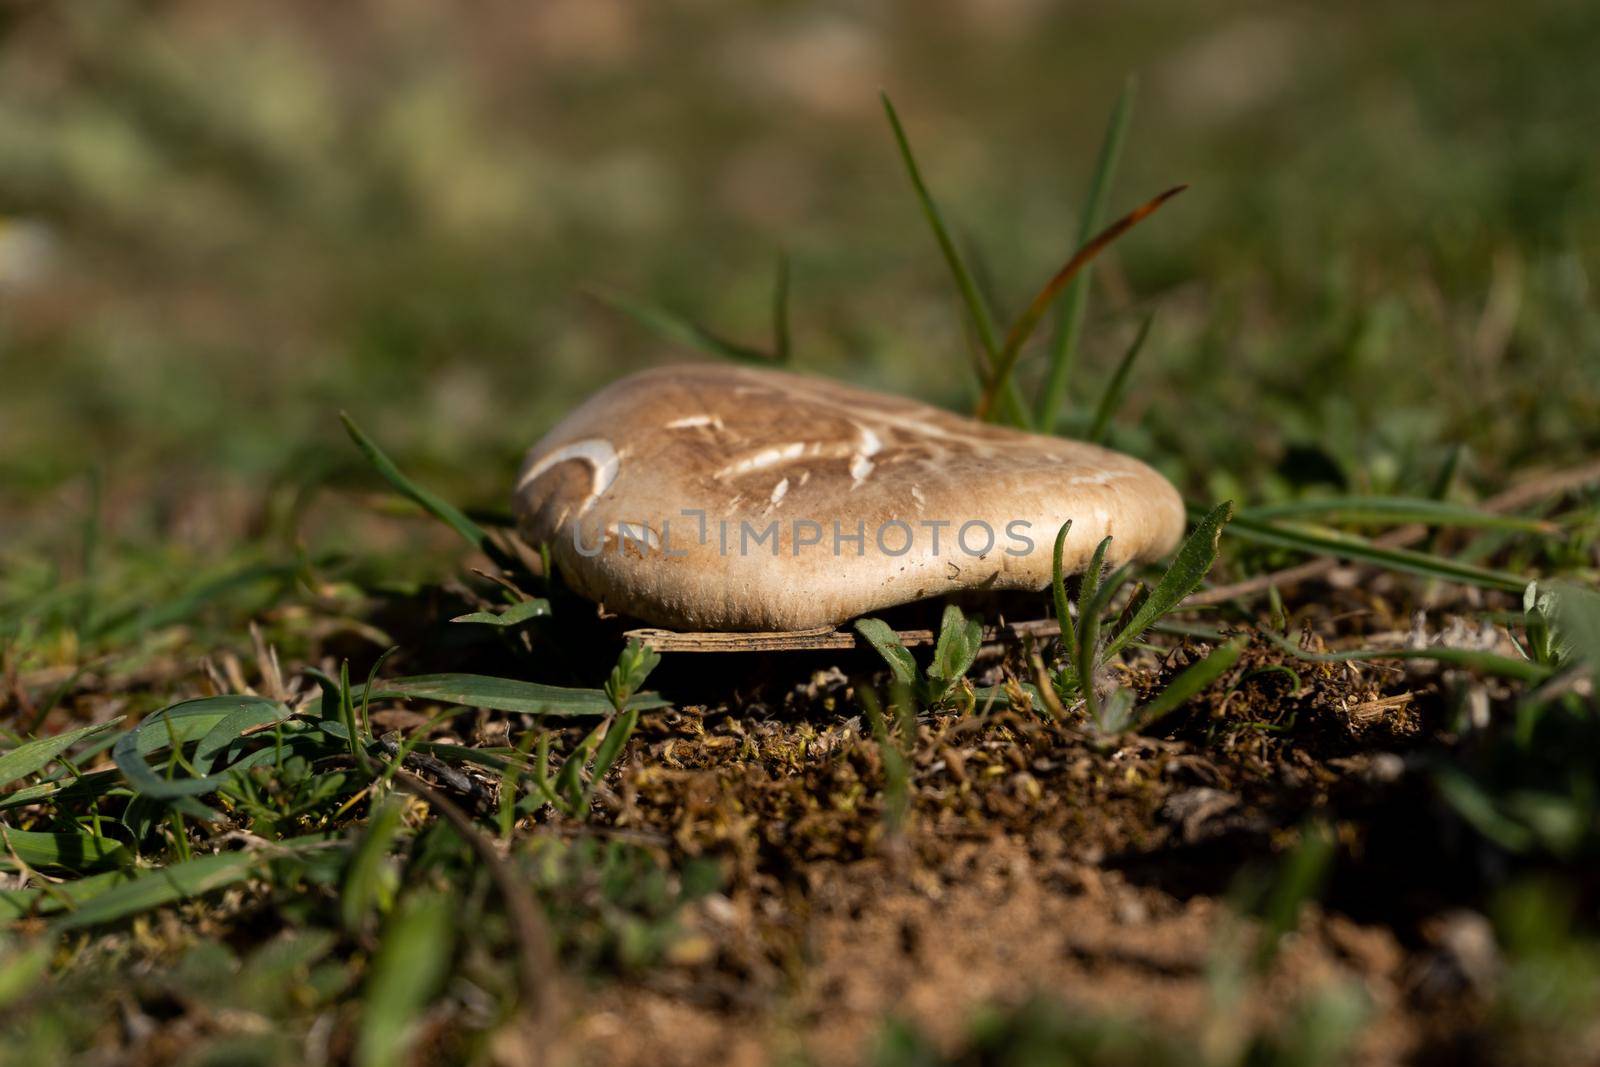 thistle mushroom in the field pleurotus ostreatus by joseantona